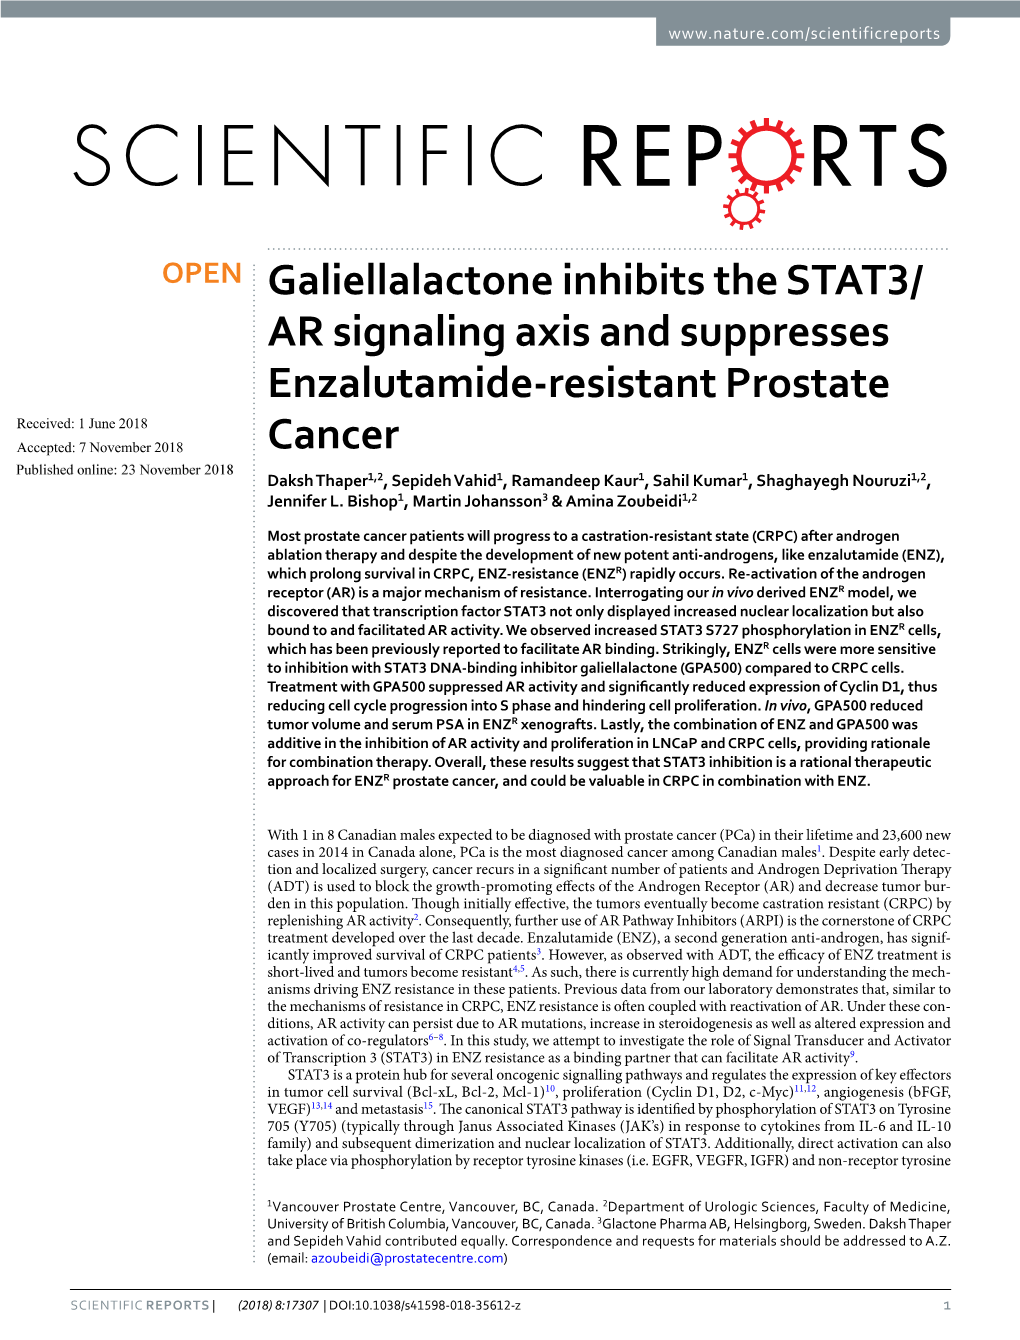 Galiellalactone Inhibits the STAT3/AR Signaling Axis and Suppresses